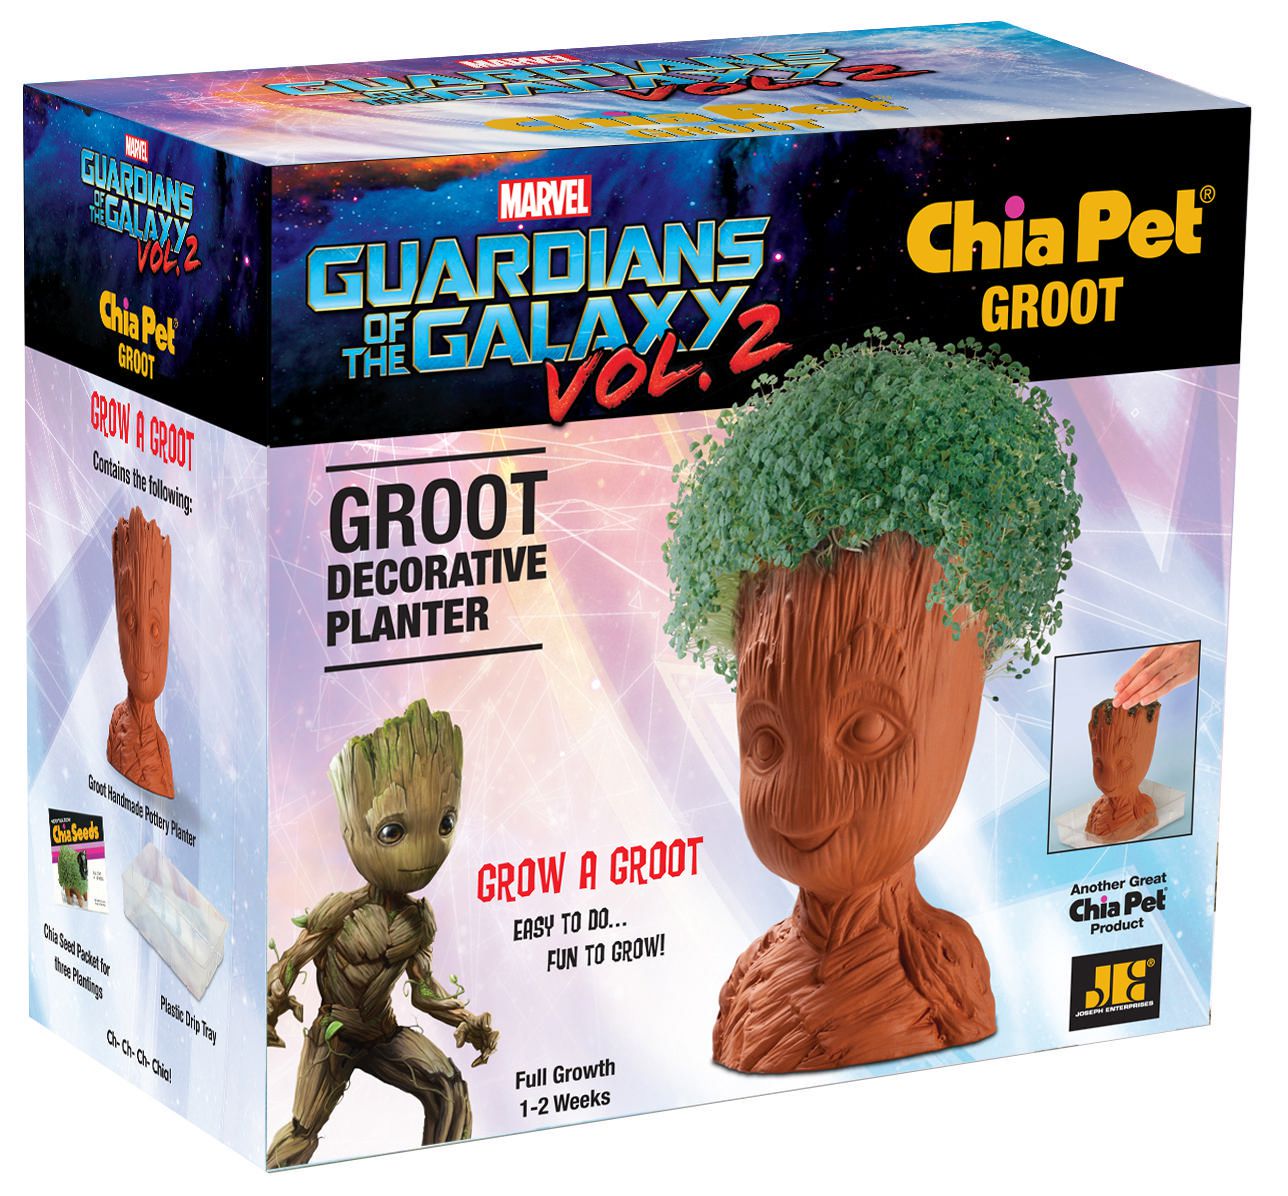 Chia Pet Groot Handmade Decorative Planter | Walmart Canada